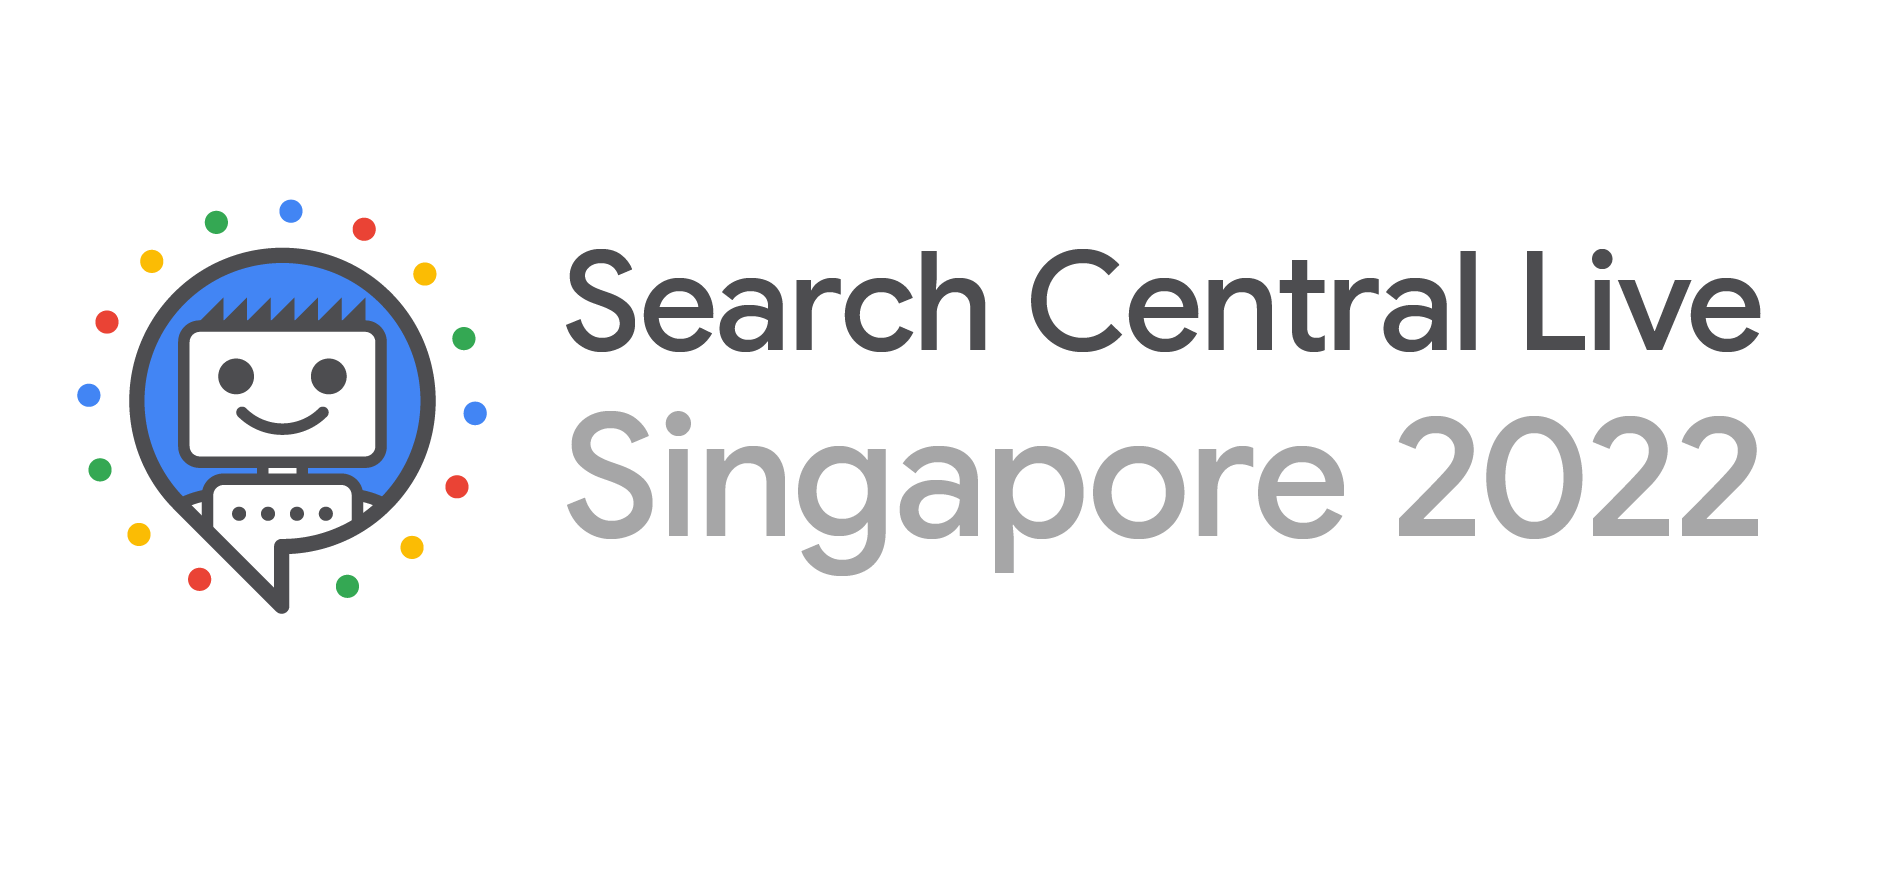 谷歌在新加坡举办 Search Central Live 2022 活动